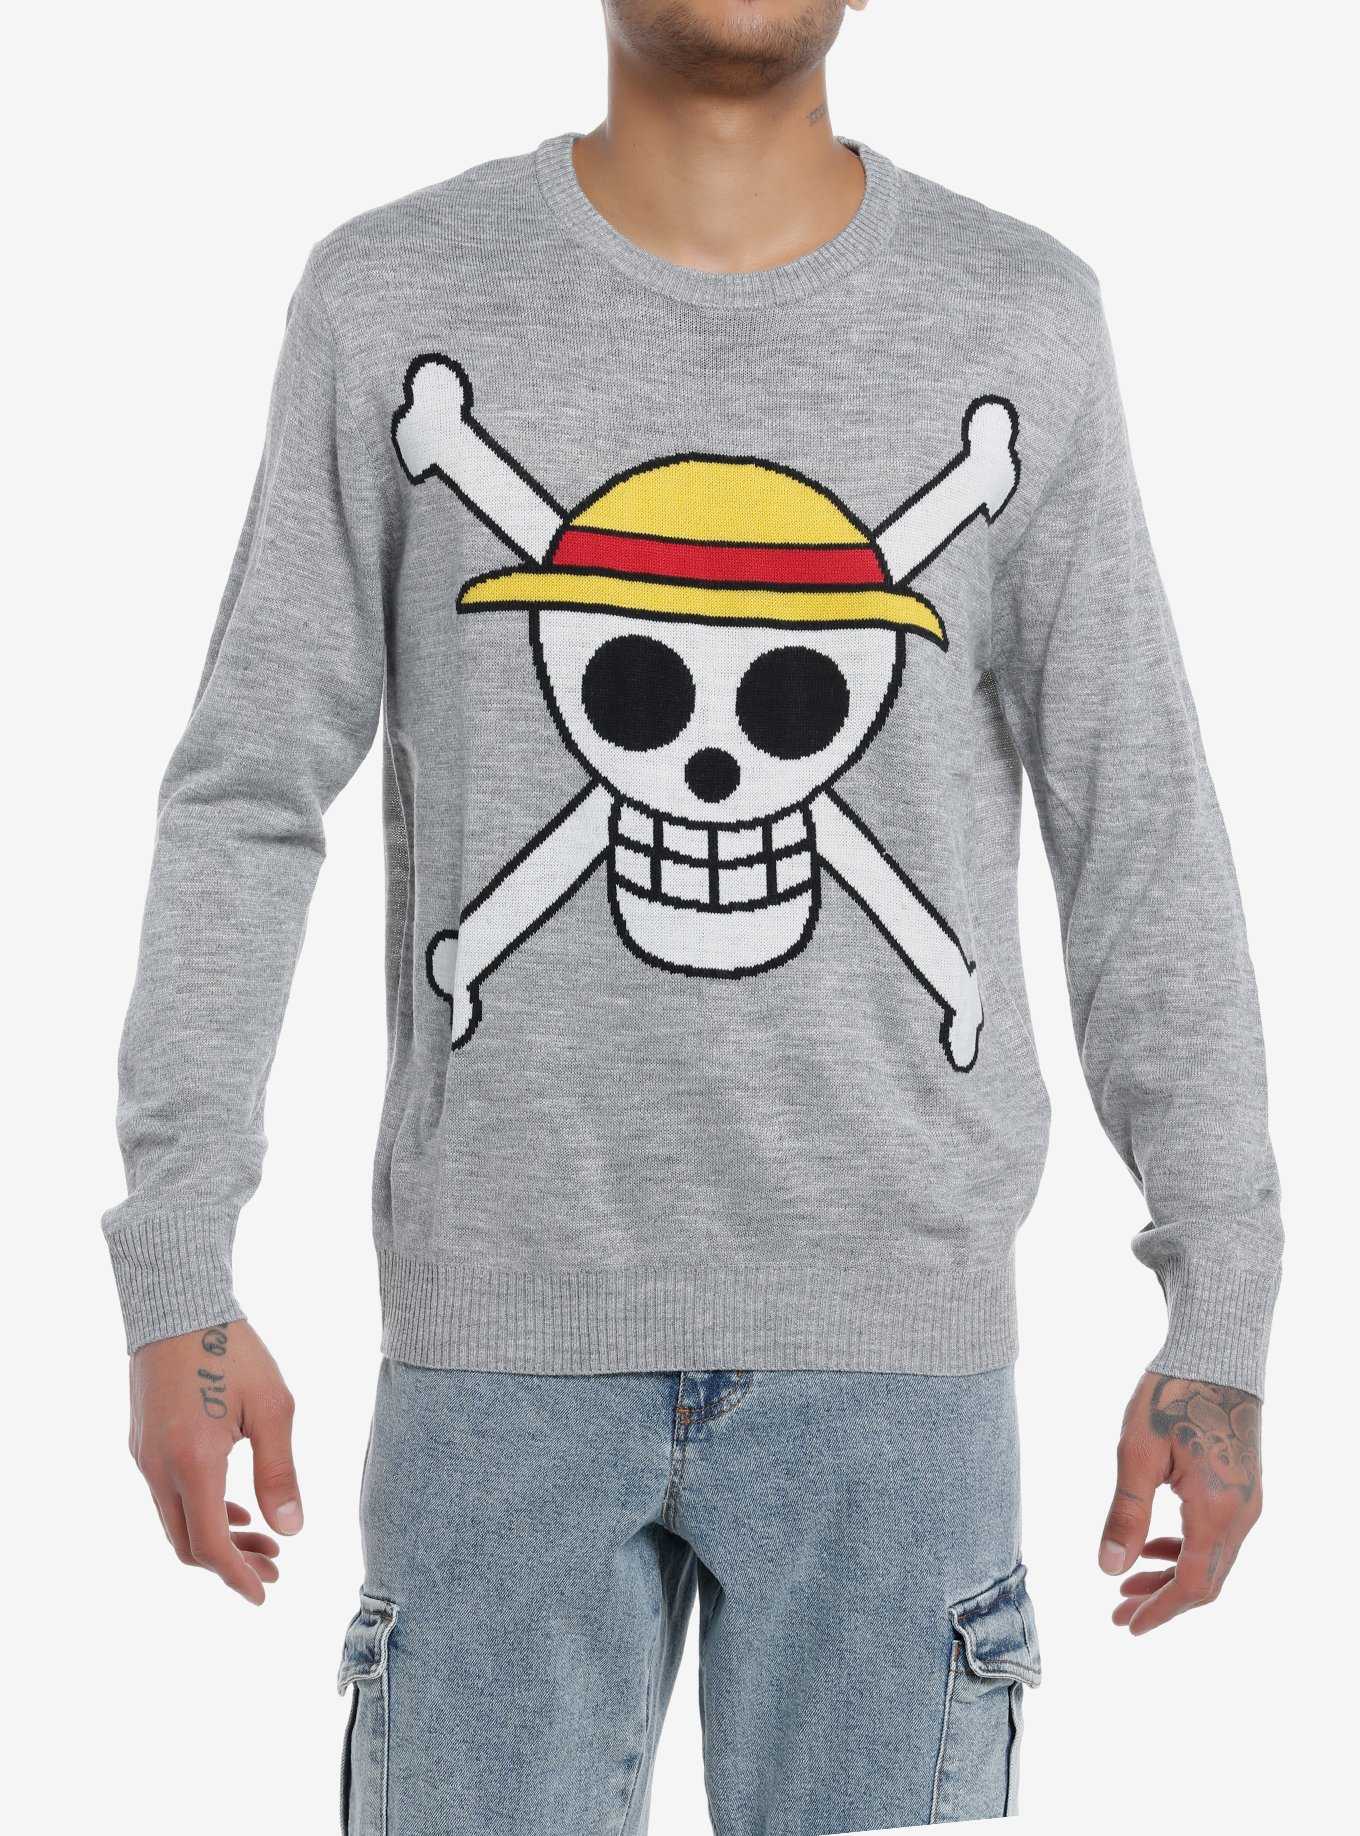 WIFSEELING One Piece Fleece Hoodie Anime Sweatshirts Men Women